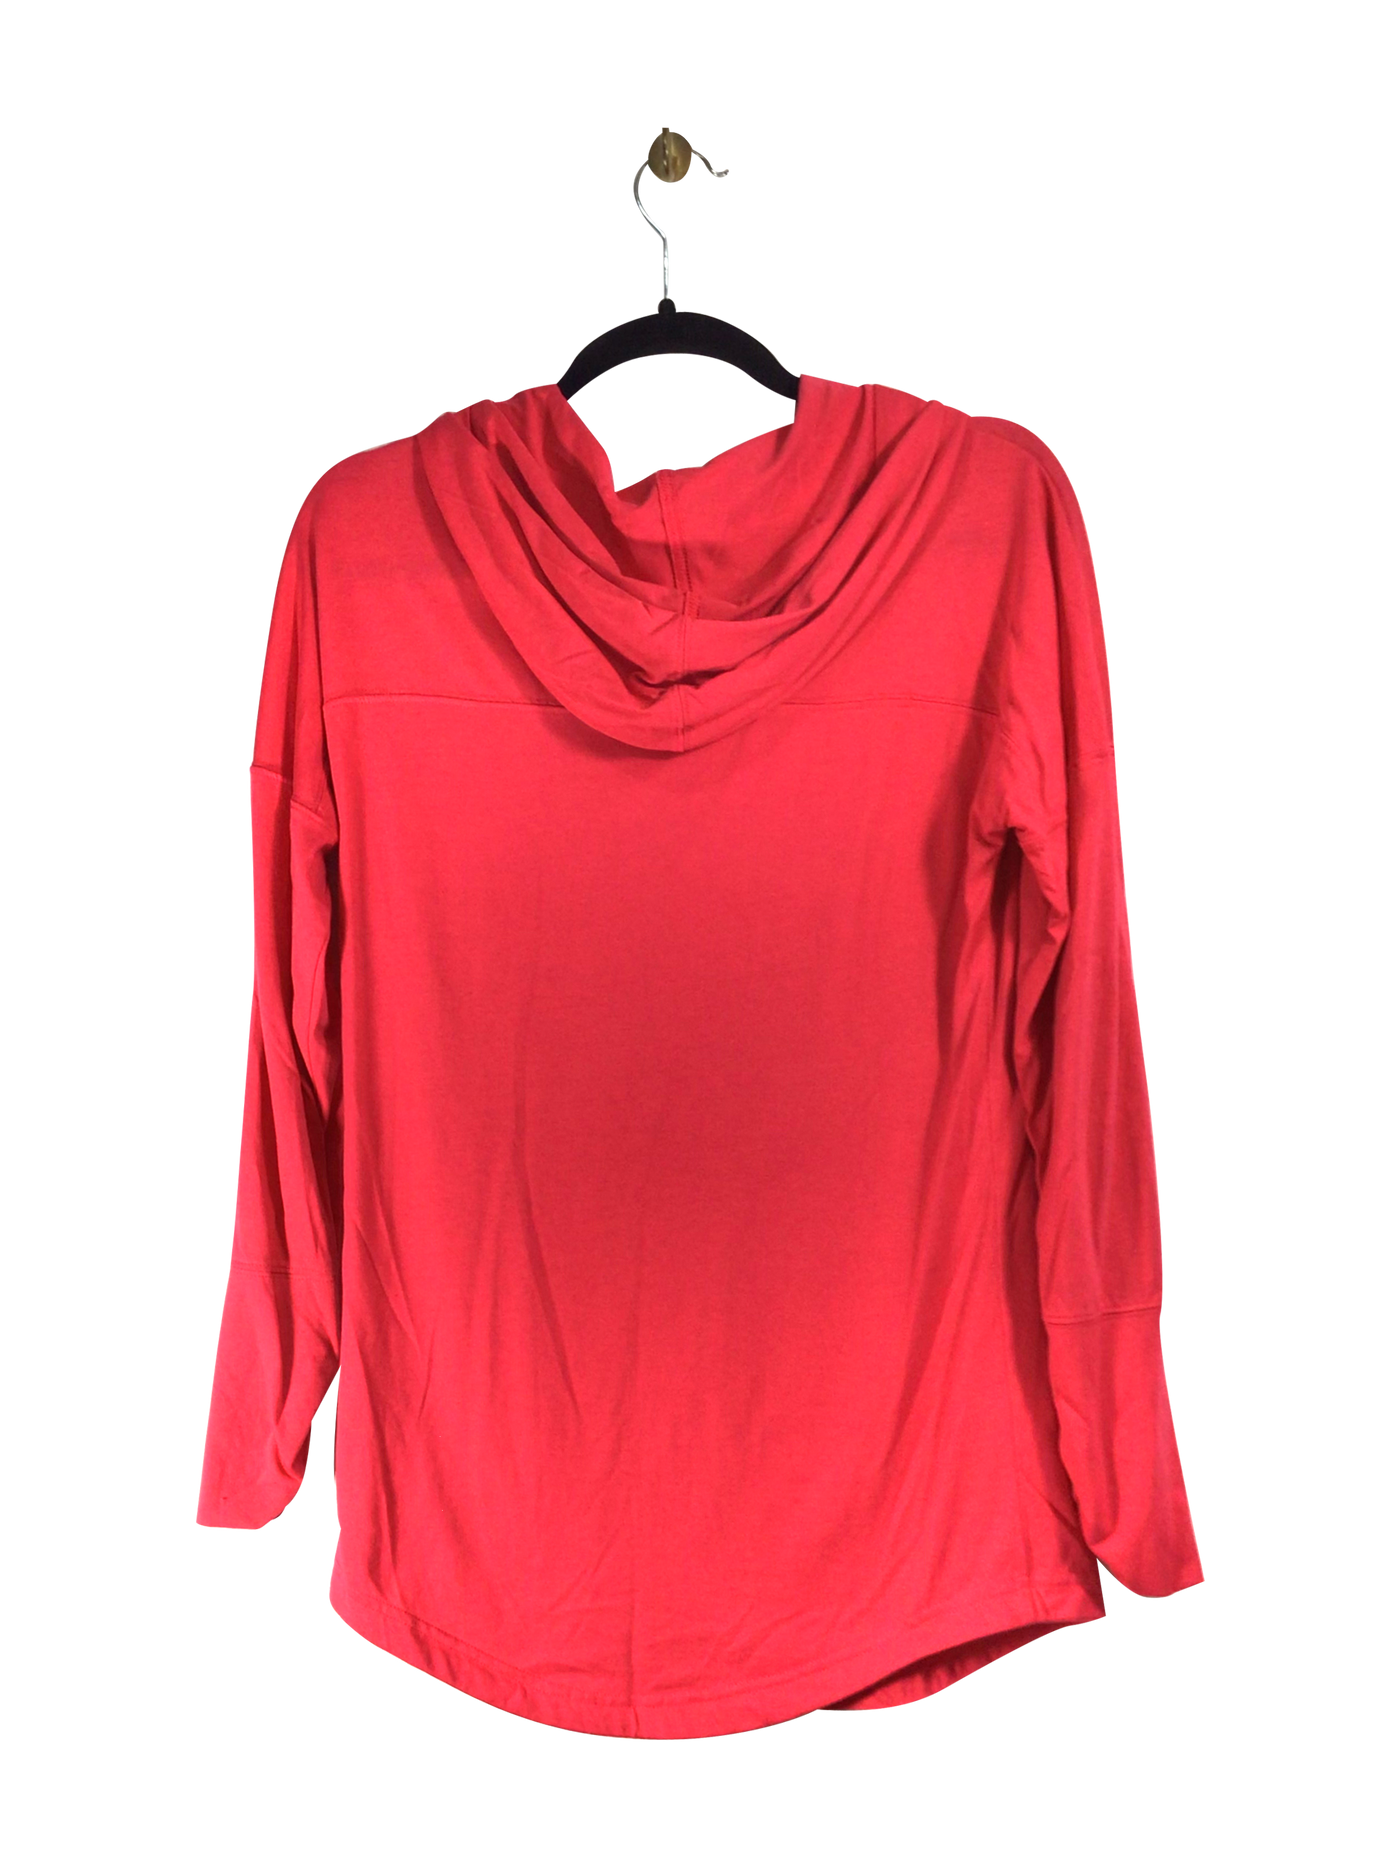 PUMA Women Activewear Jackets Regular fit in Pink - Size S | 11.89 $ KOOP